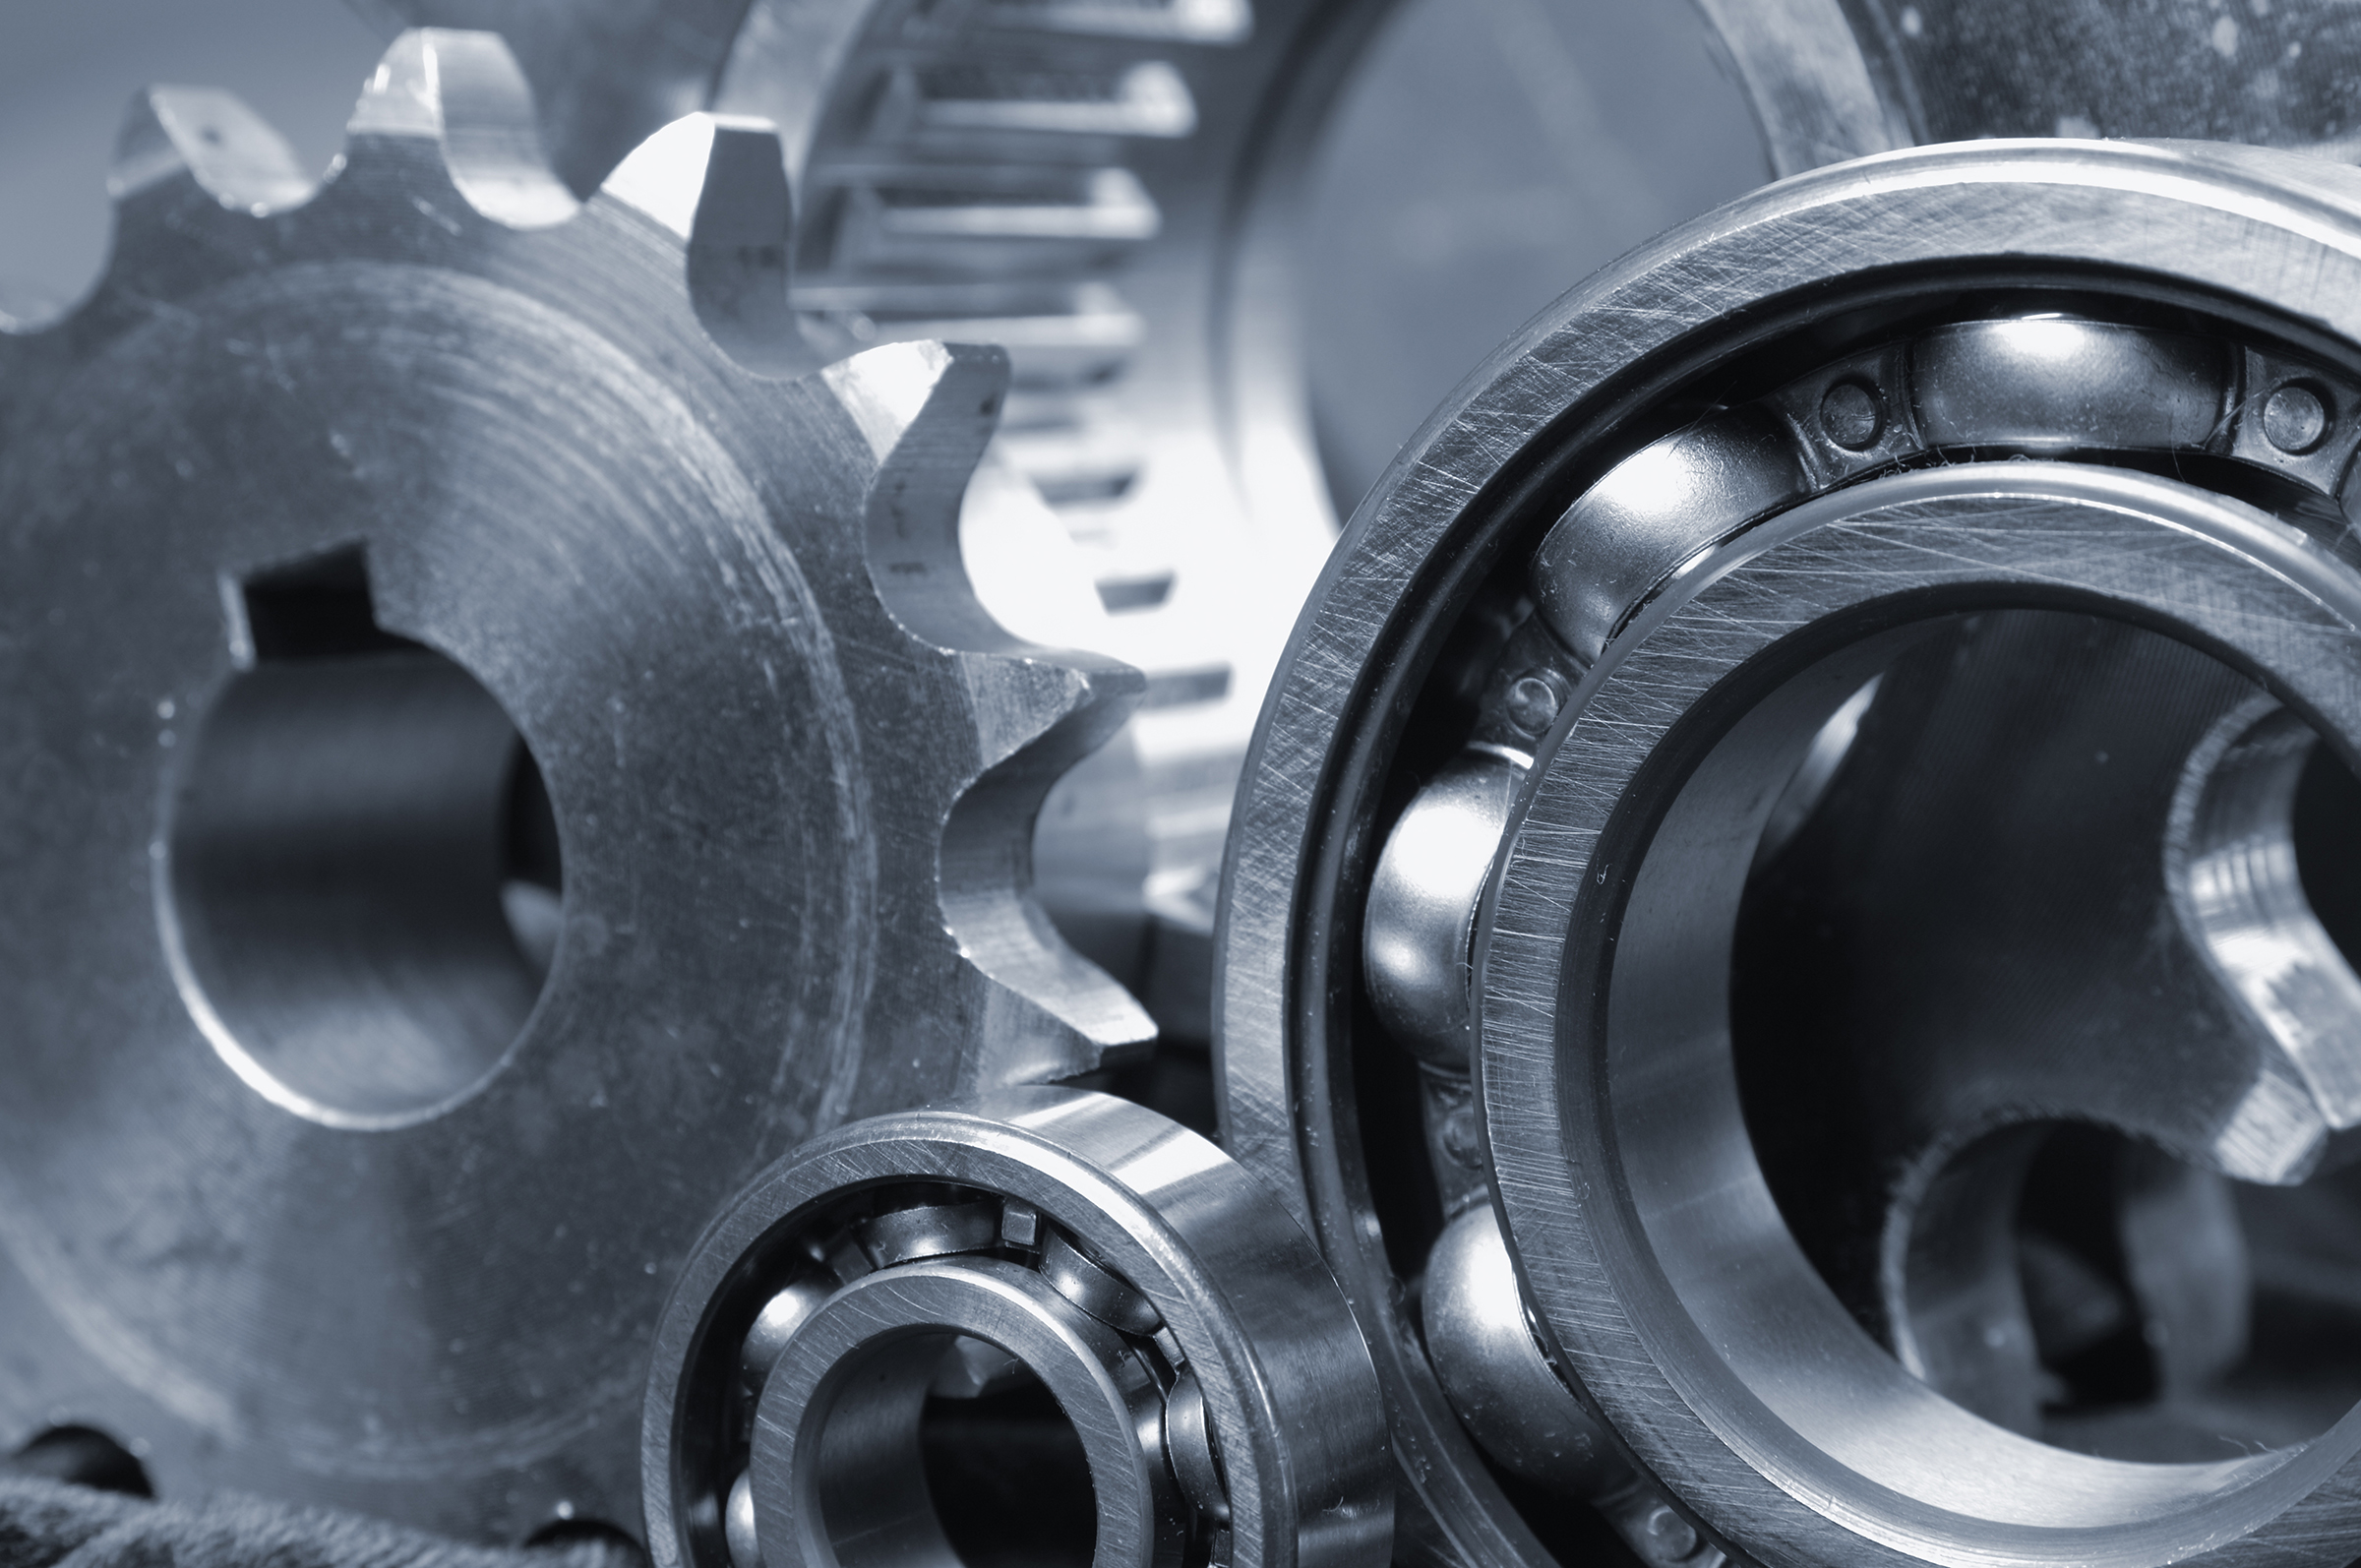 Gears and bearings in steel gray